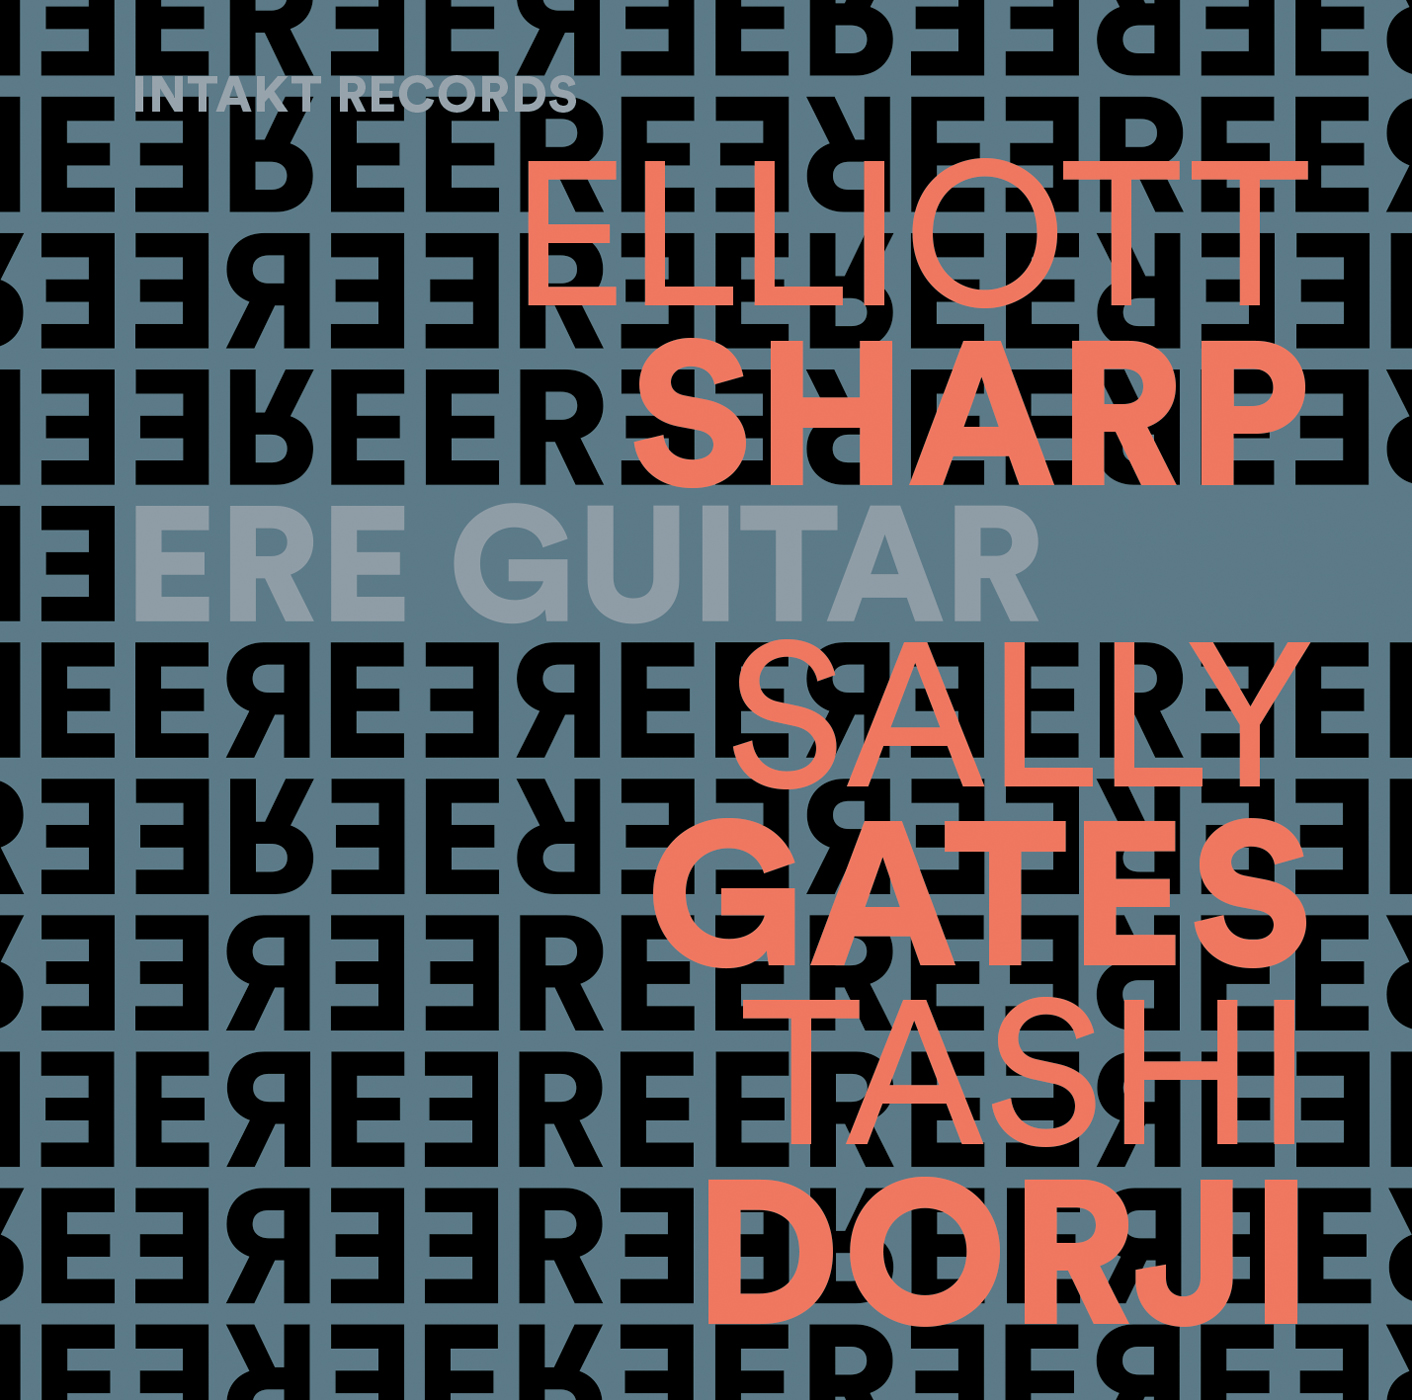 Cover Intakt 418 BELLIOTT SHARP – SALLY GATES – TASHI DORJI. ERE GUITAR